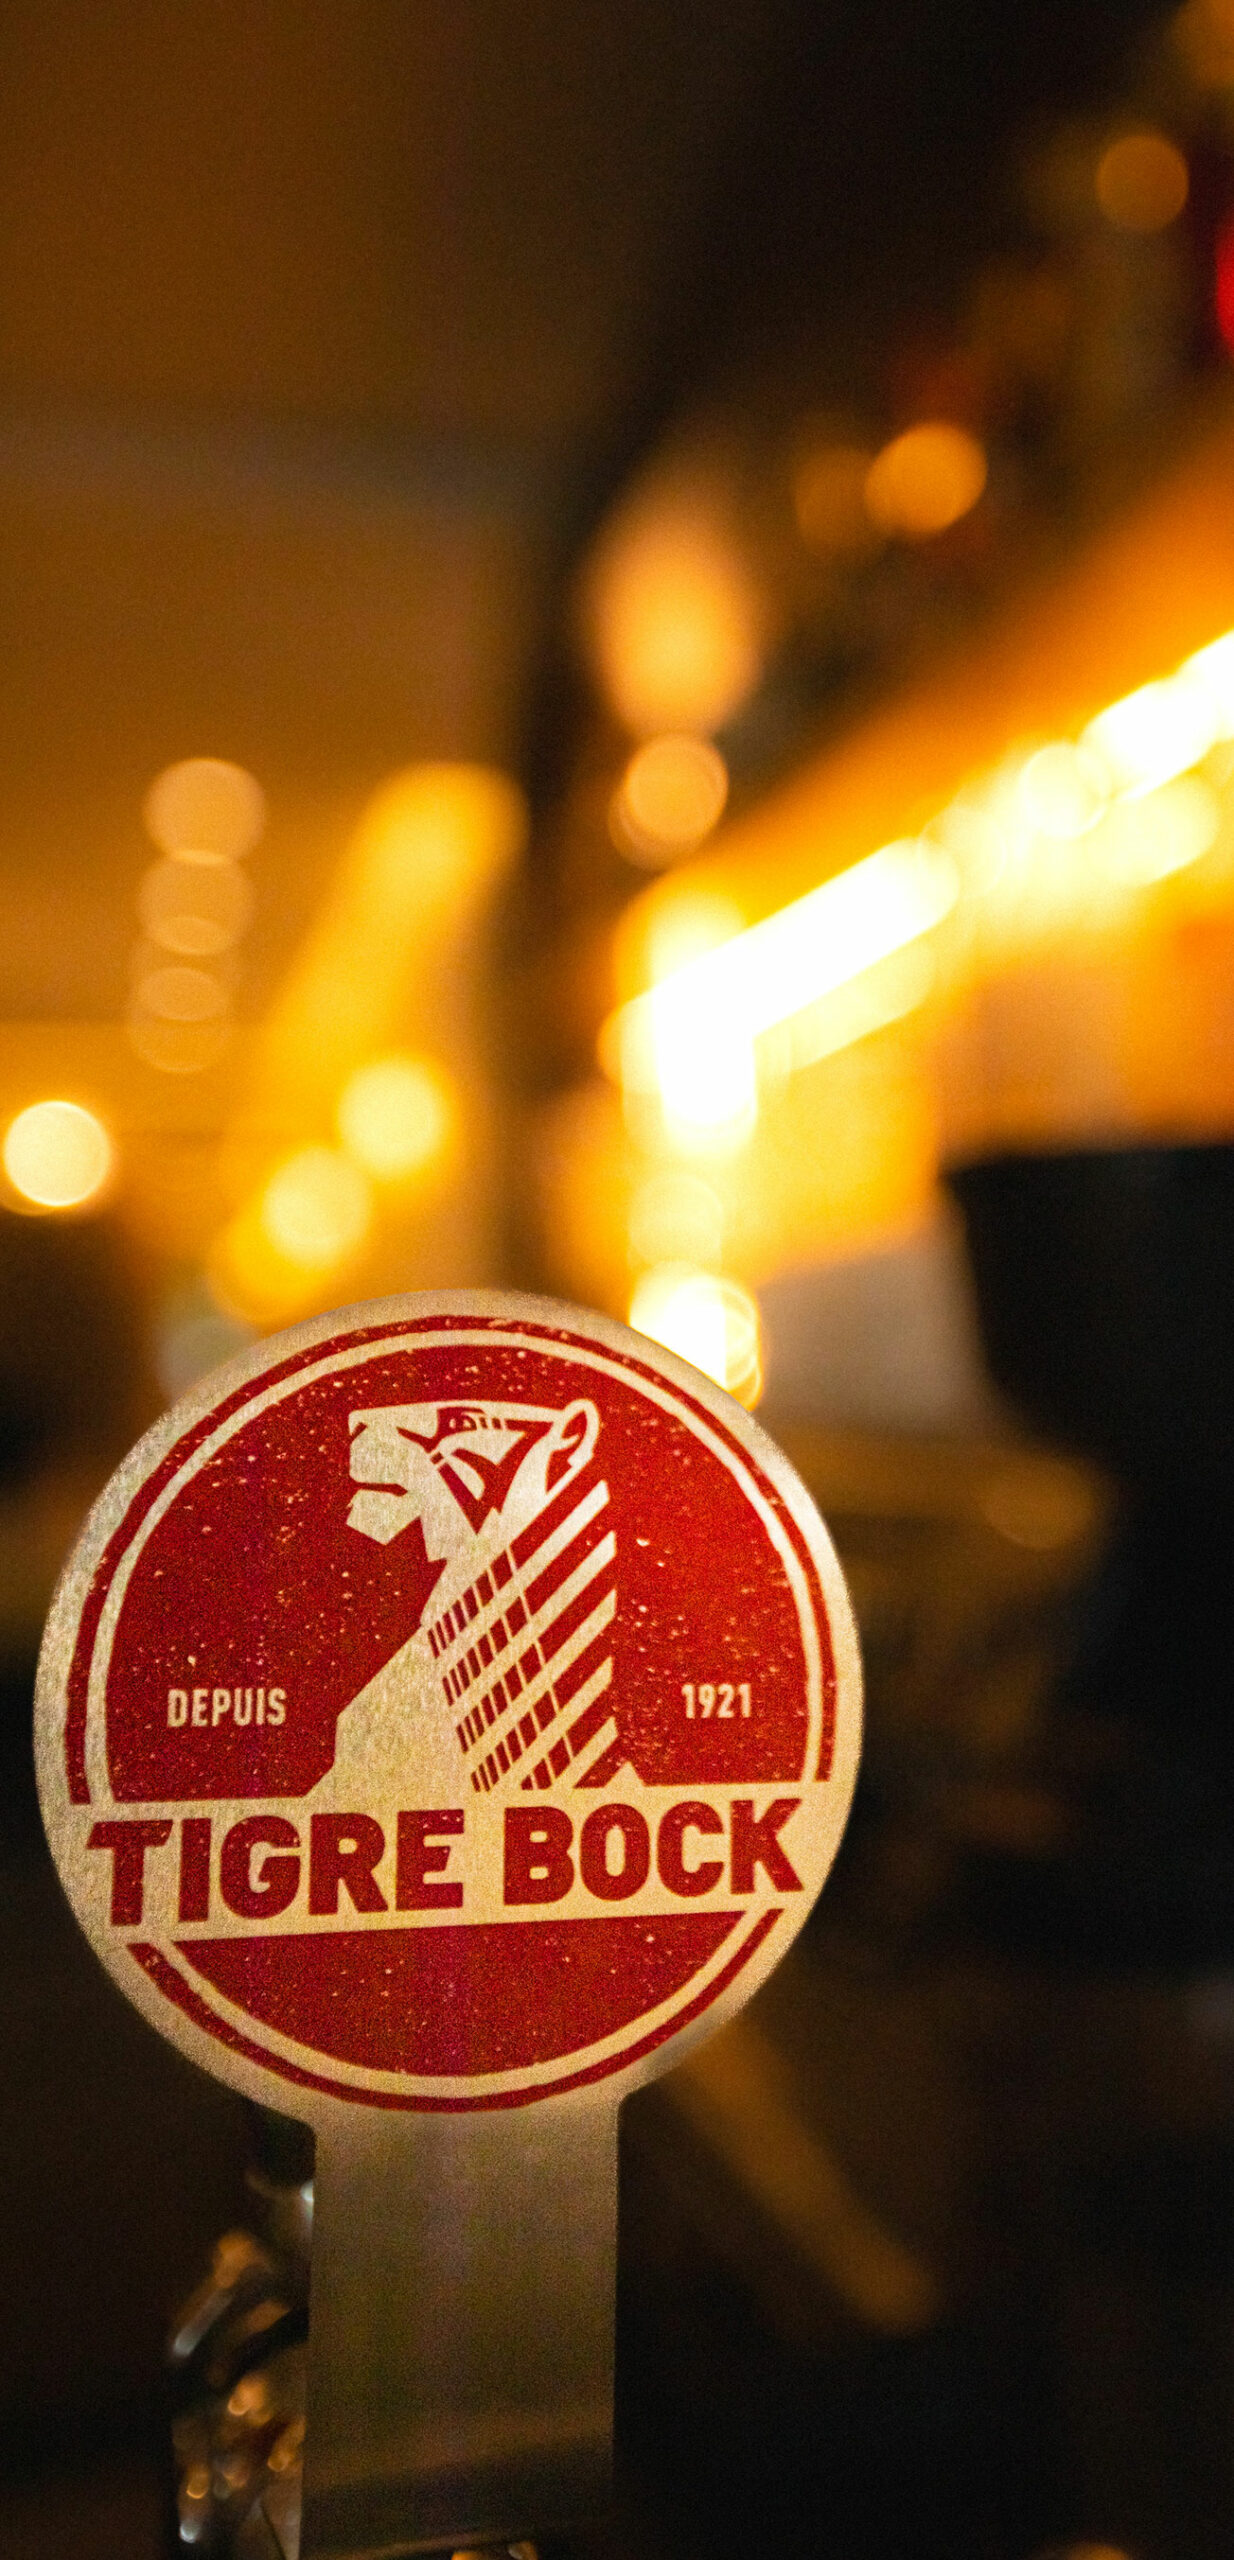 Bière Tigre Bock